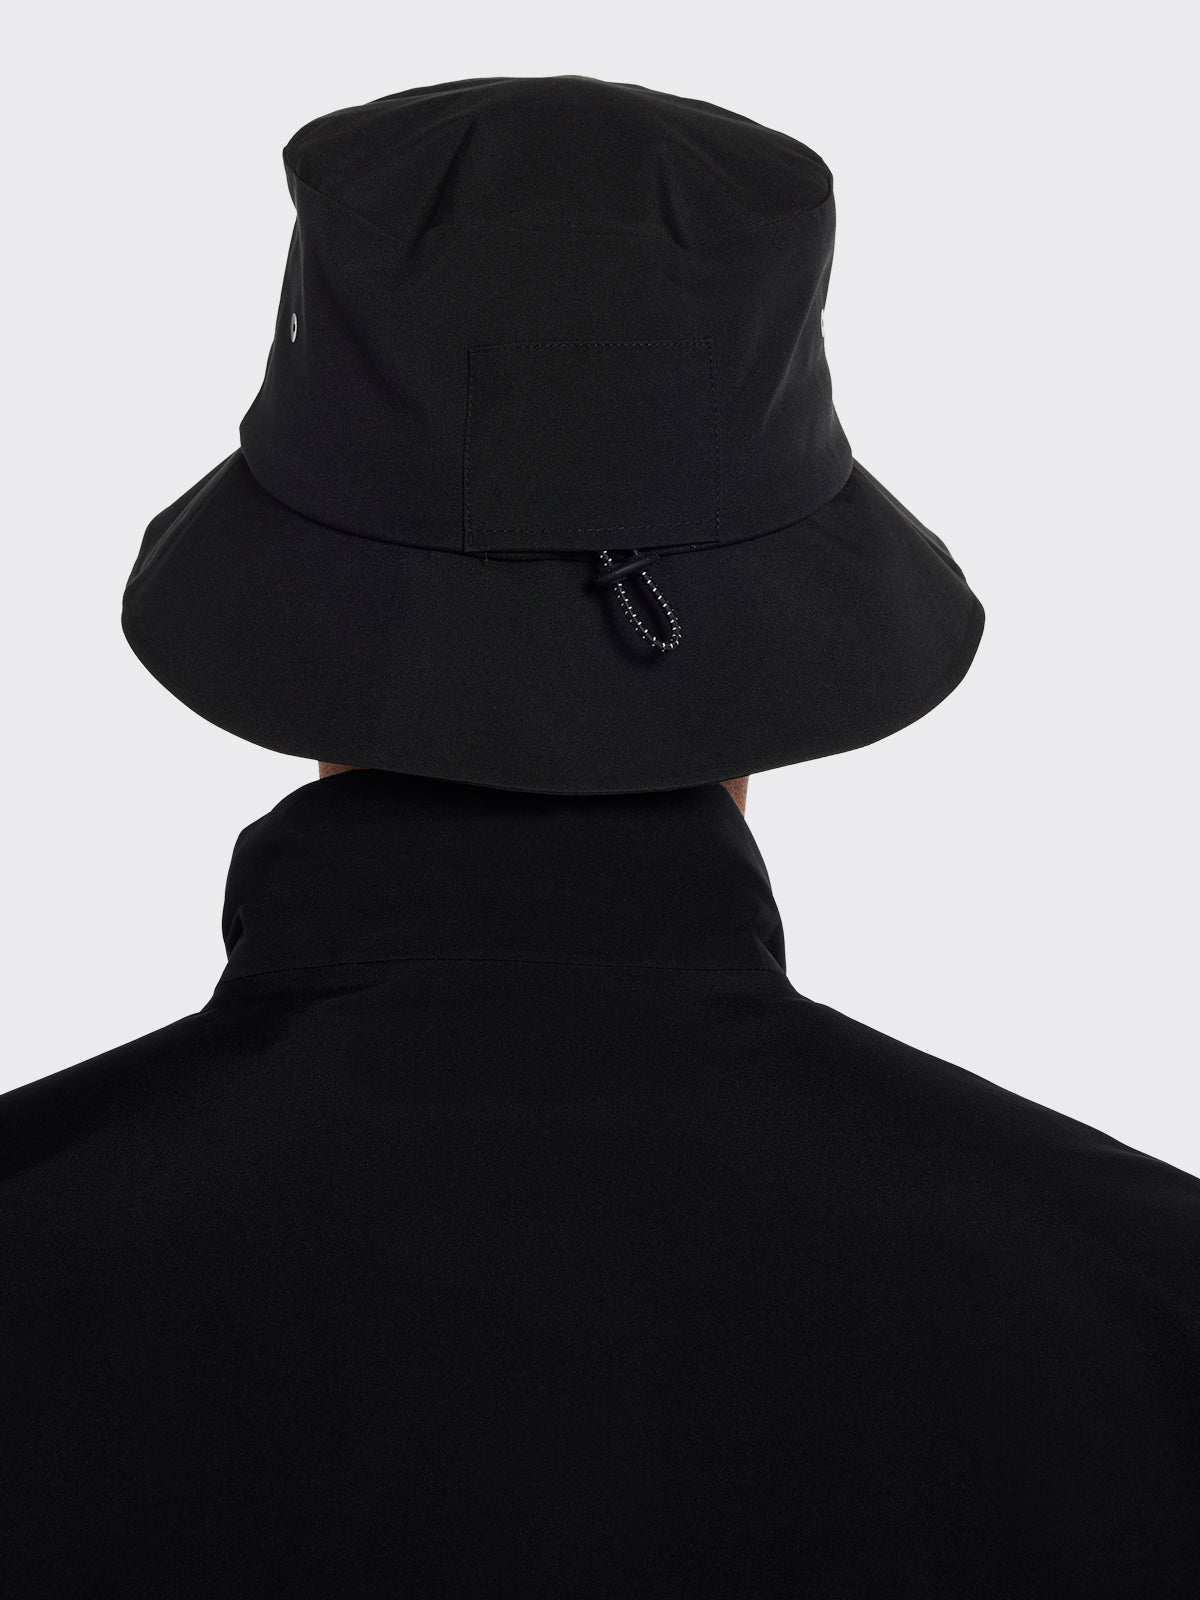 Øya bucket hat in Black by Blæst